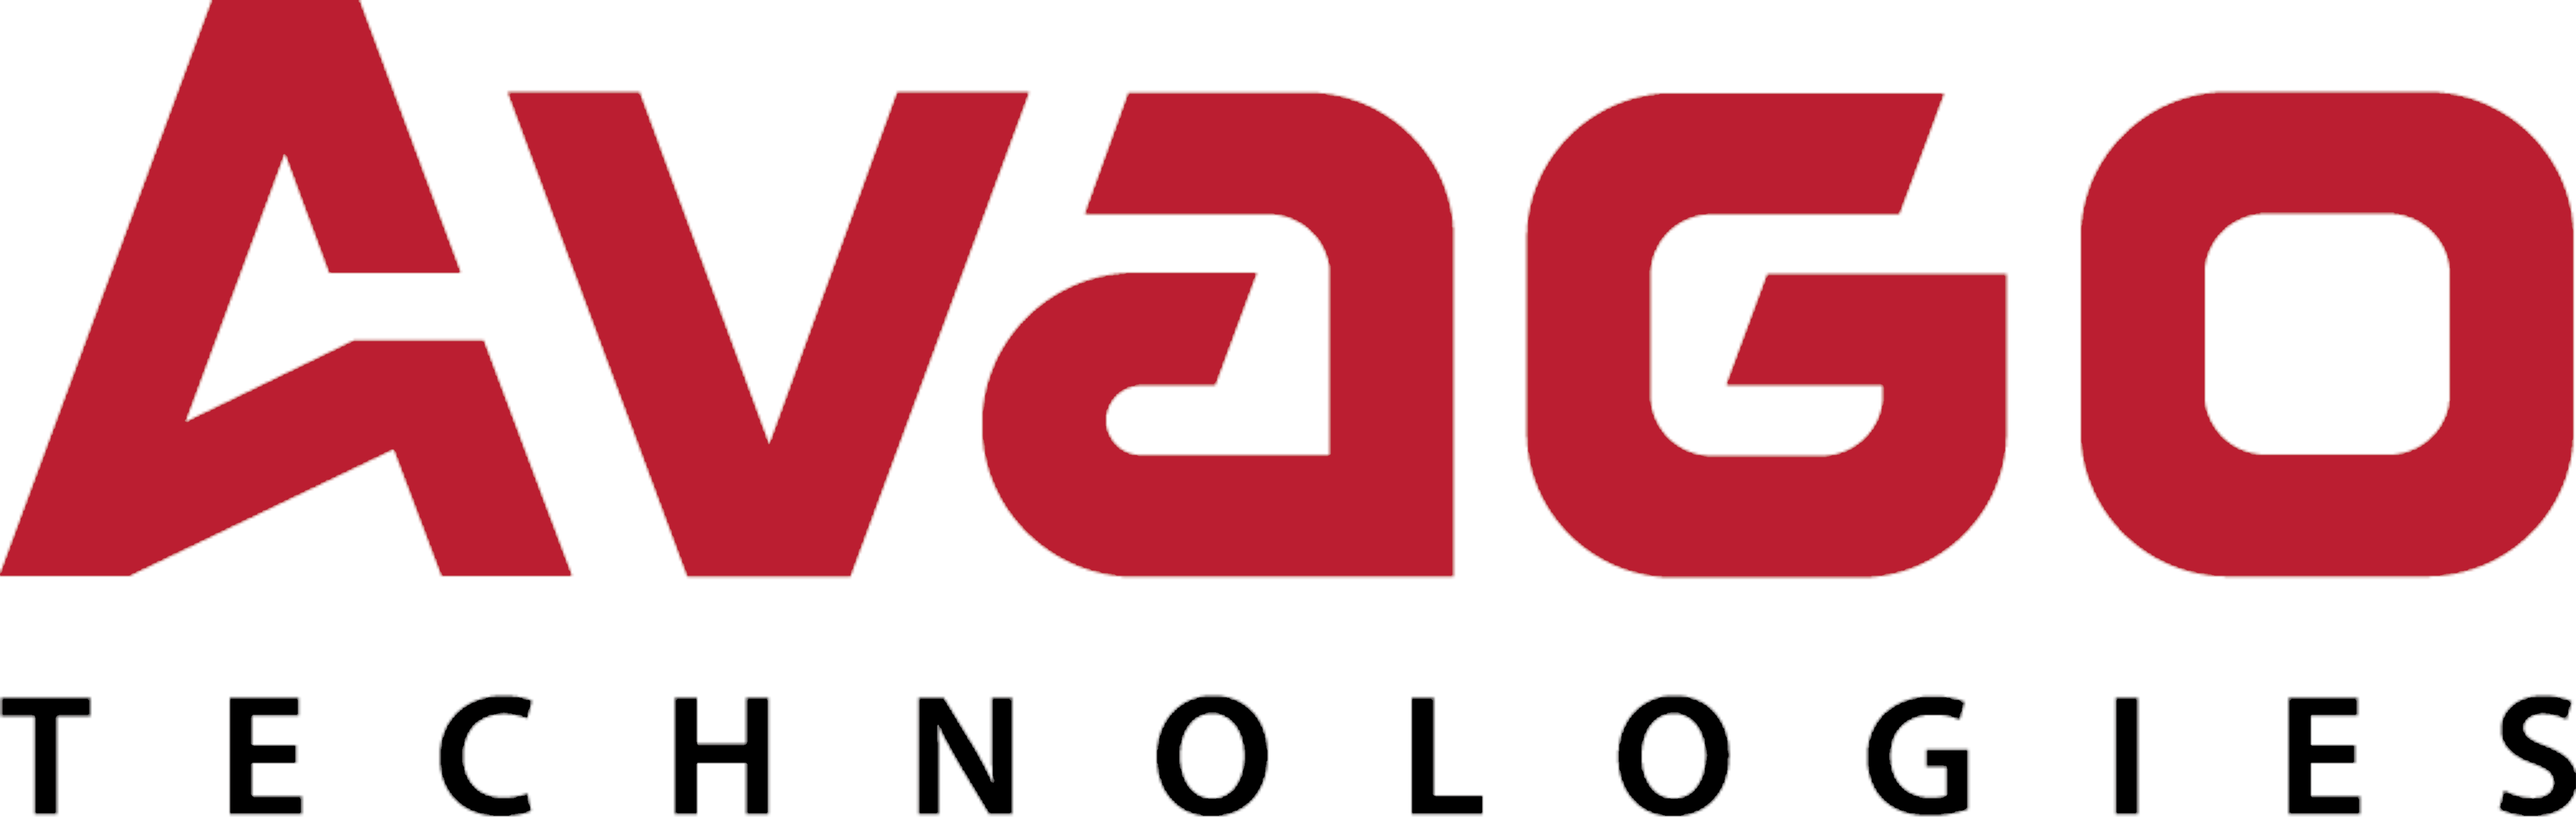 Avago Technologies logo – Logos Download